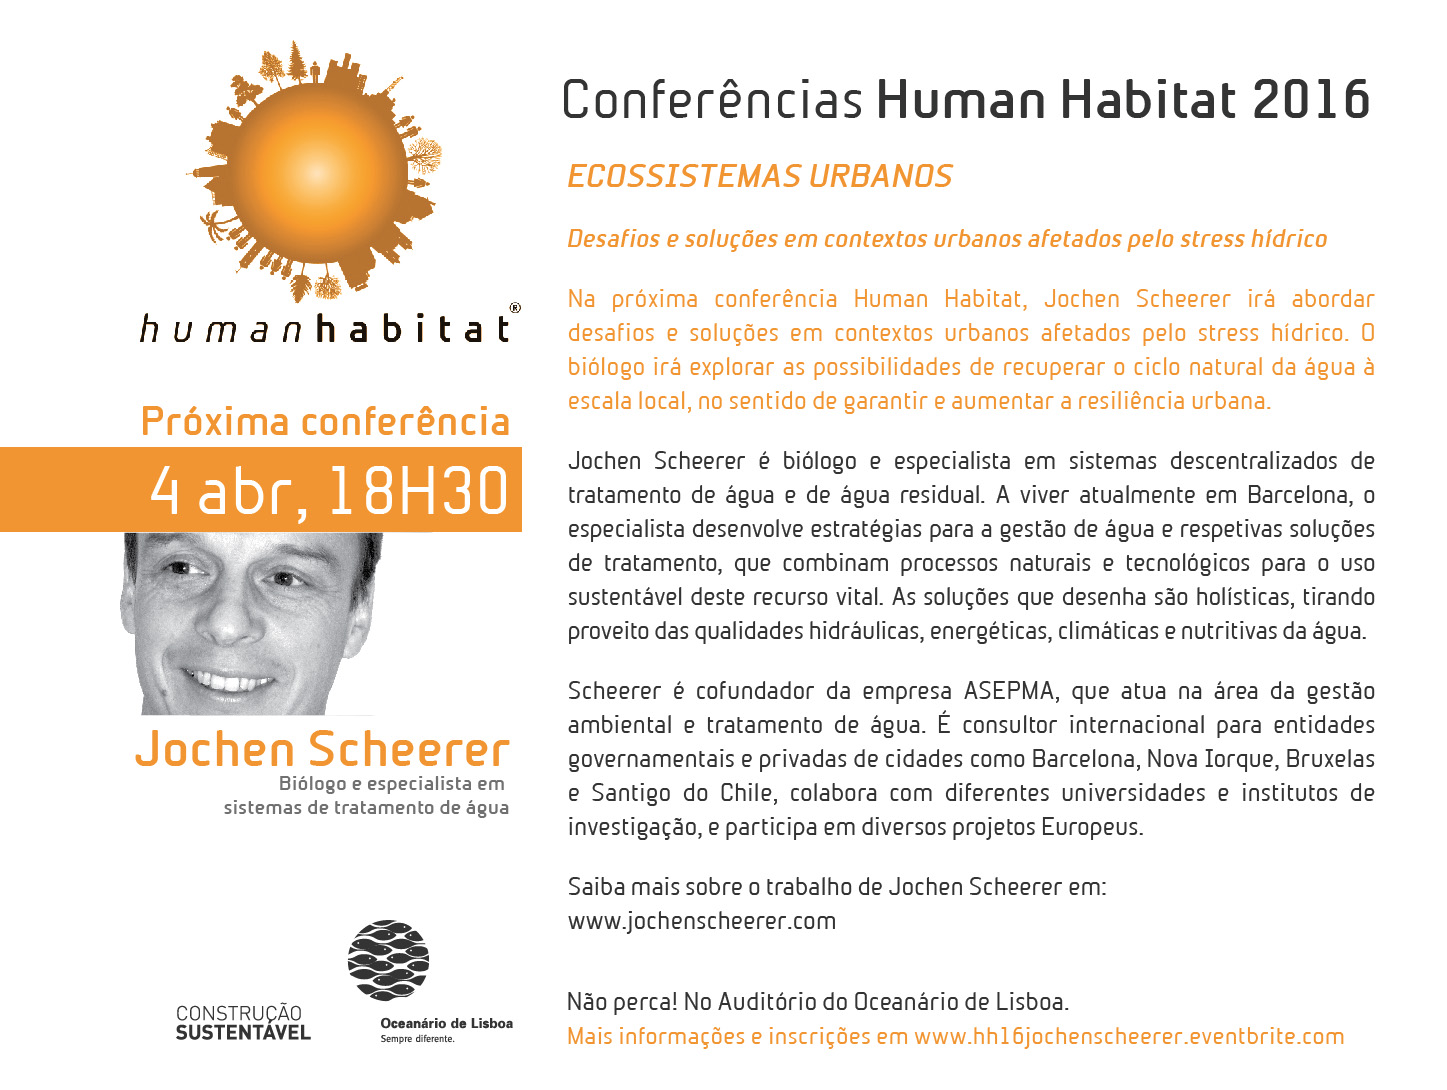 Conferências "Ecossistemas Urbanos" (Human Habitat)